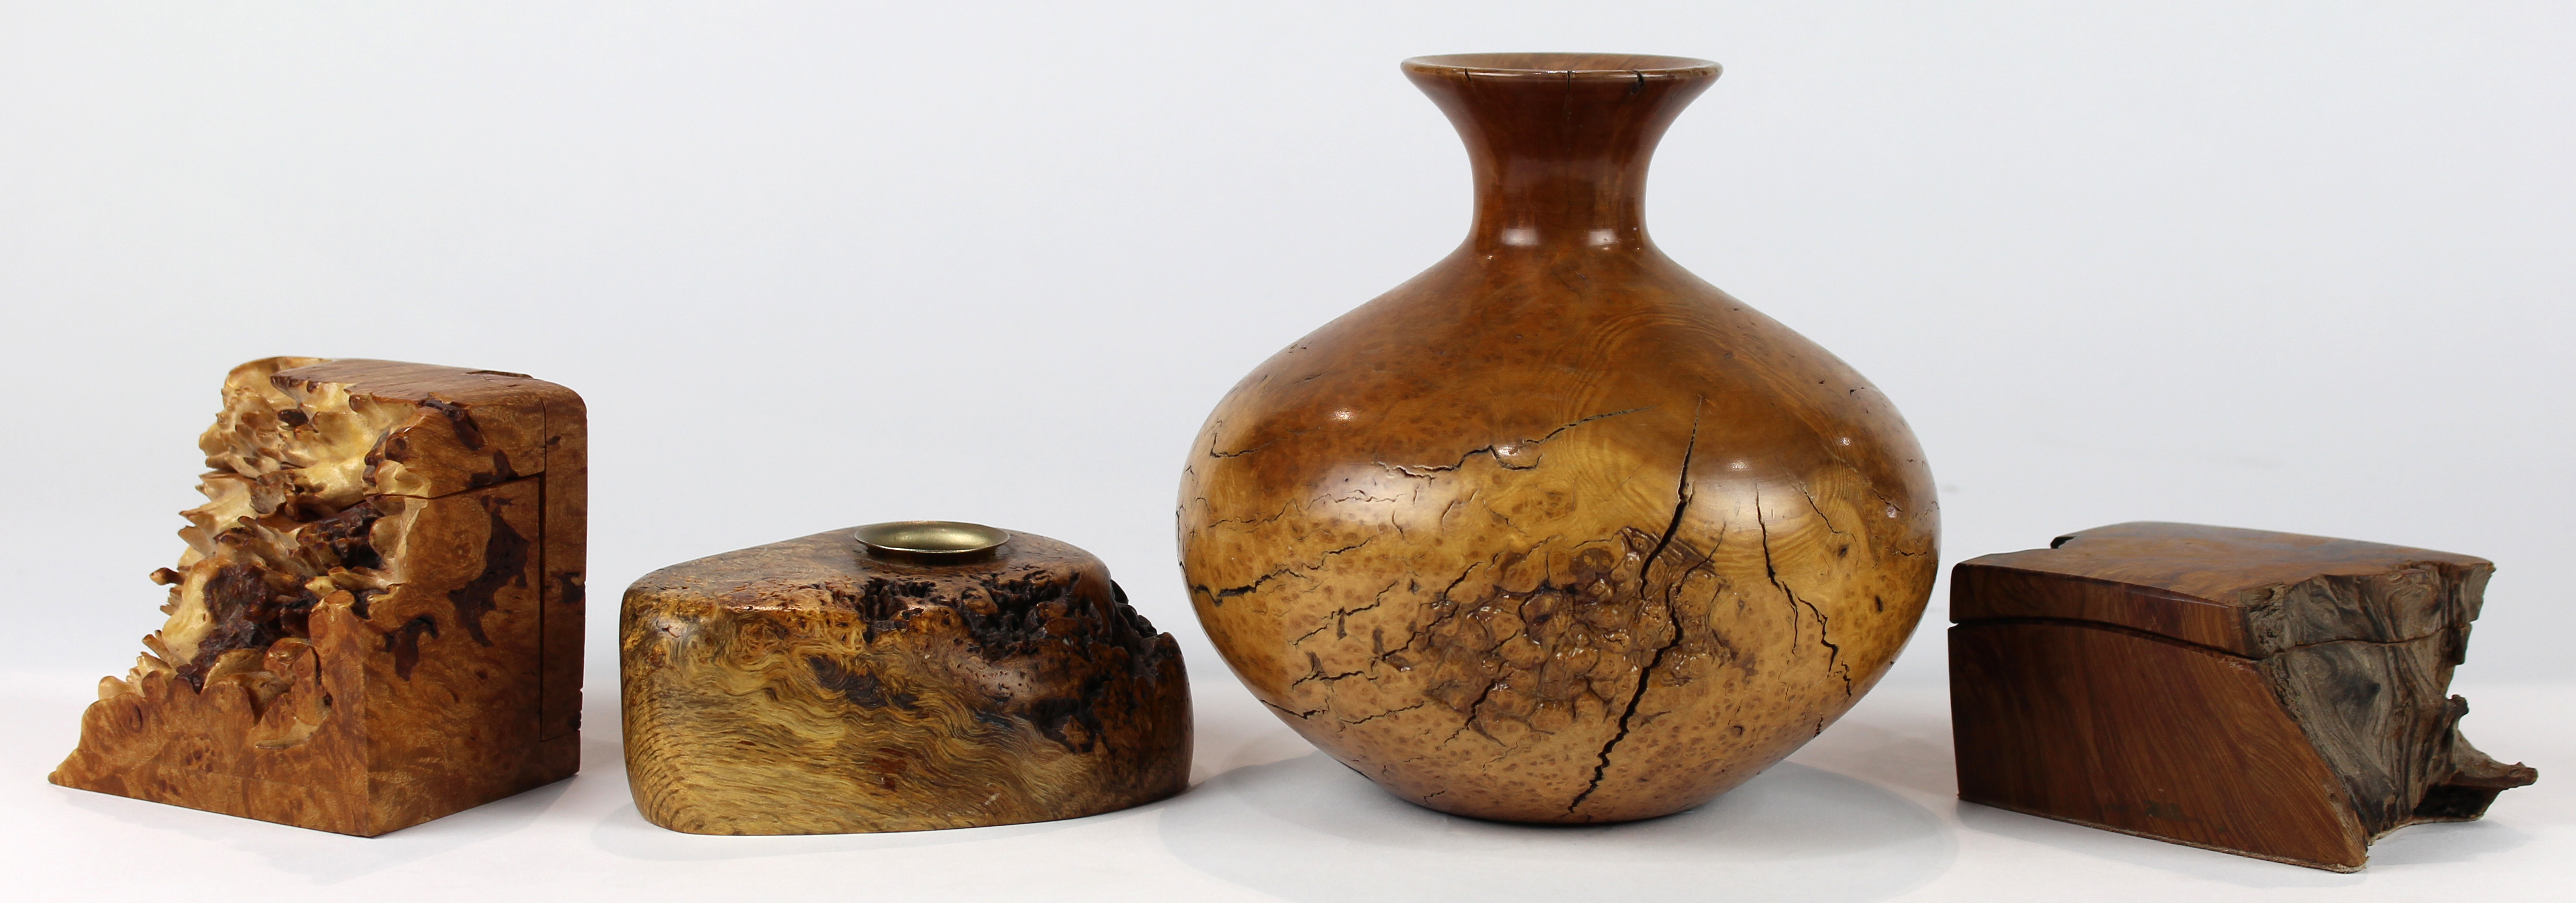 (lot of 4) Decorative burl-wood vessel group, consisting of candle holder, a bud vase having